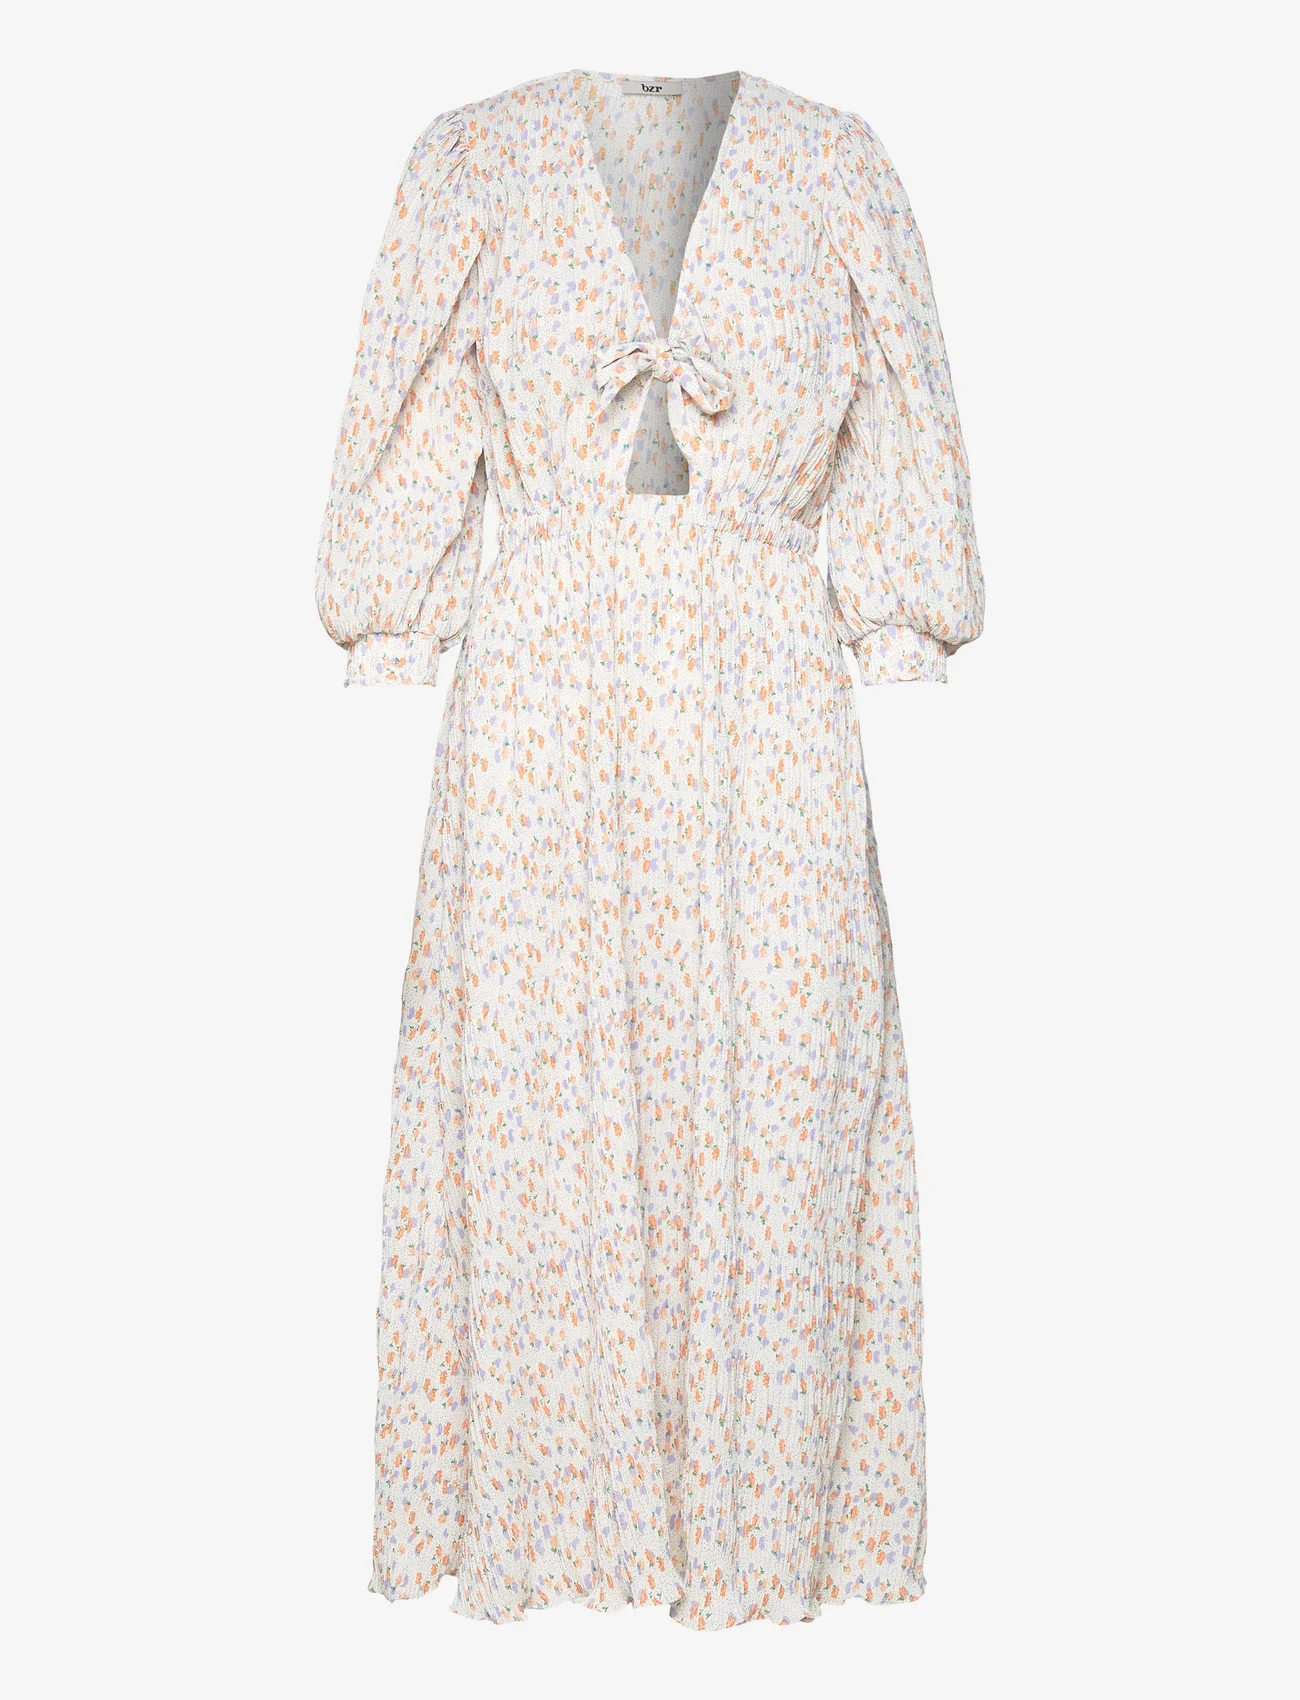 bzr - Paint Tiemo dress - summer dresses - off white / lavender - 0